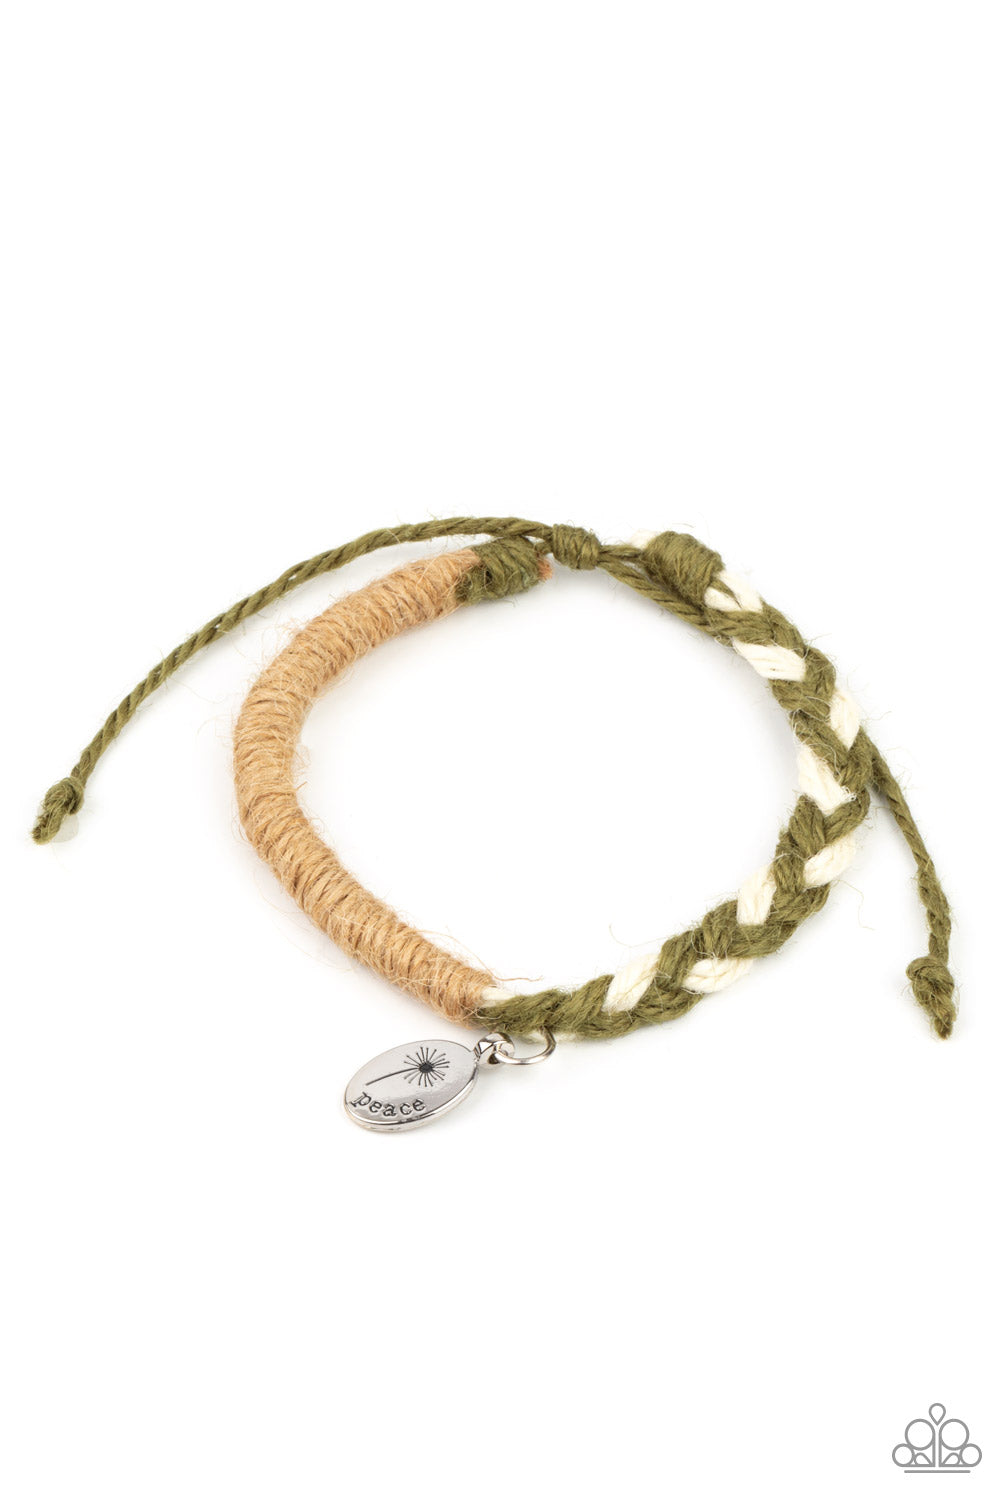 Paparazzi Perpetually Peaceful - Green - Bracelet - $5 Jewelry with Ashley Swint